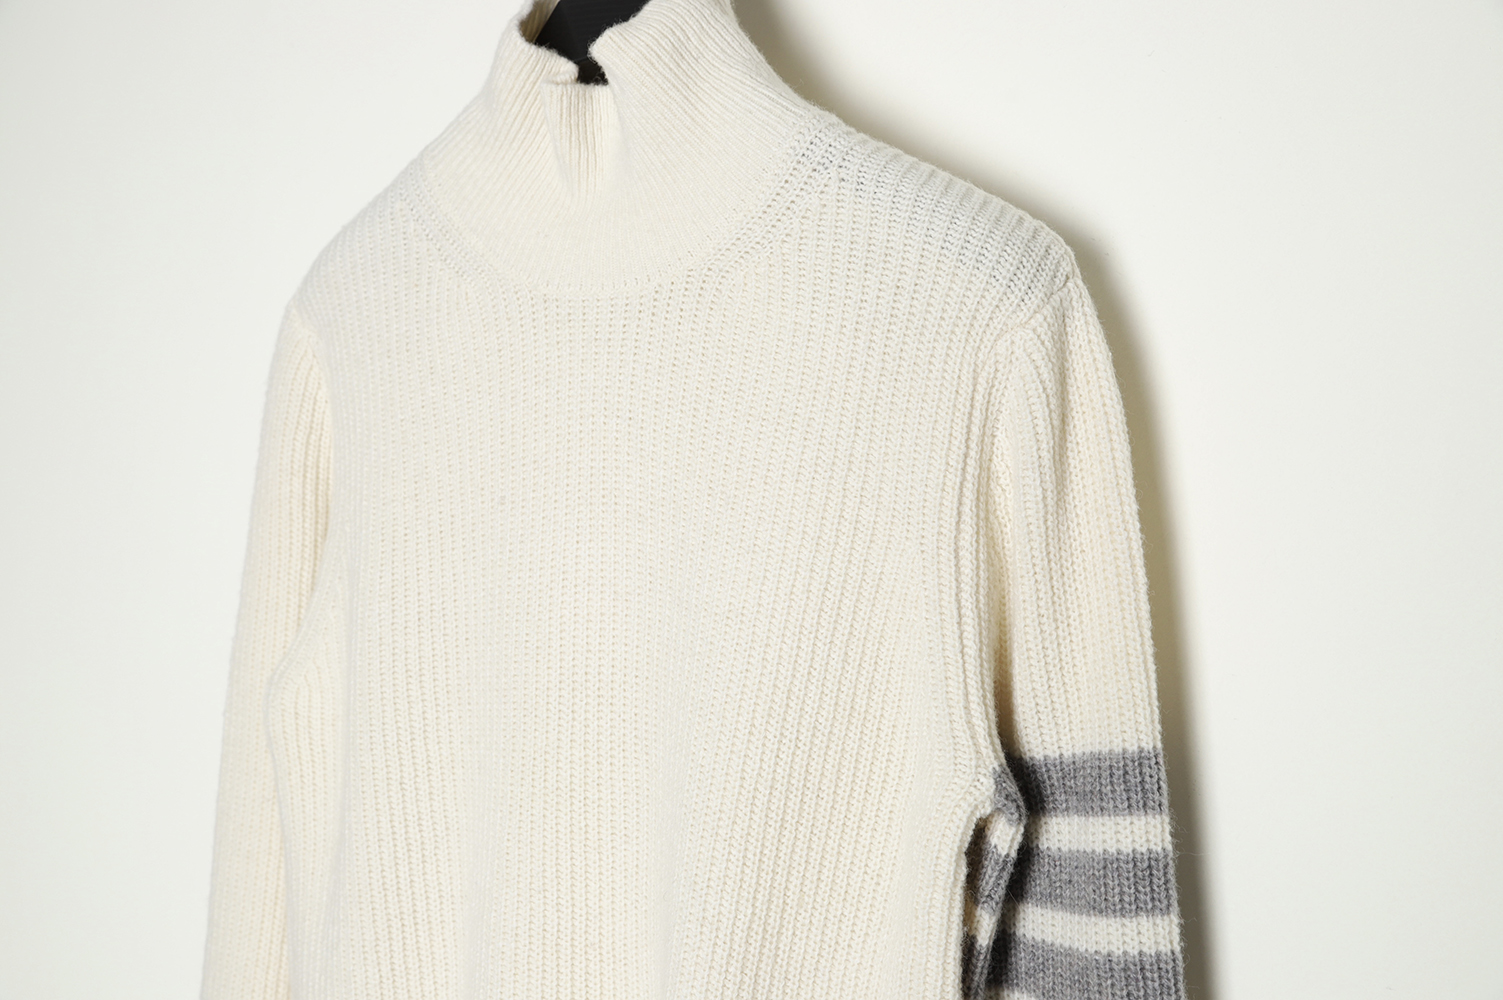 THOM BROWNE Wool turtleneck four-bar sweater